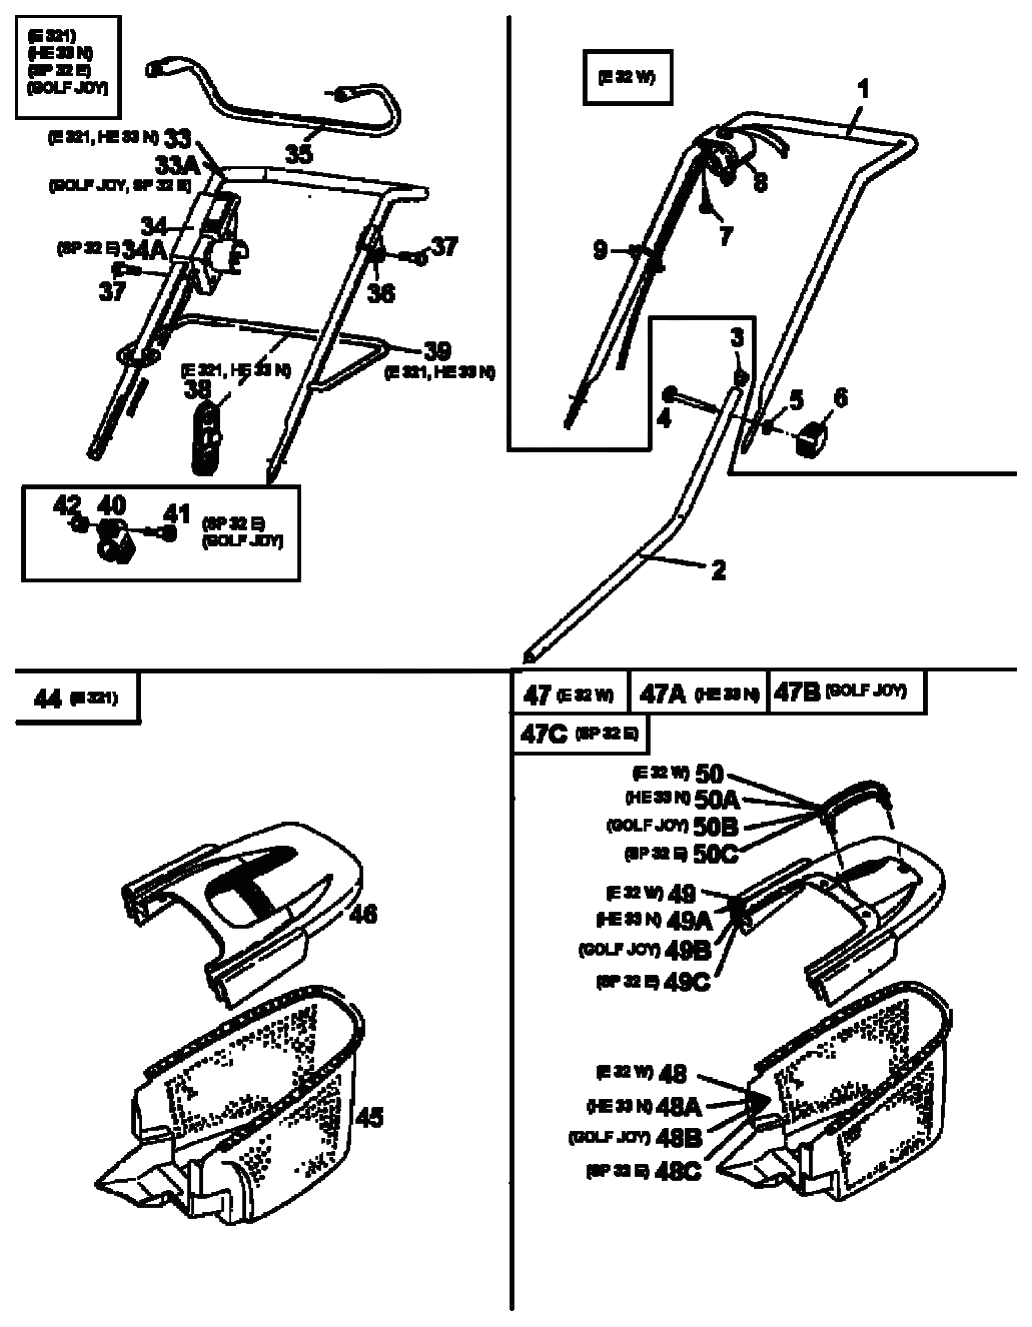 MTD Артикул 18A-C4D-678 (год выпуска 1998). Травосборник, ручка